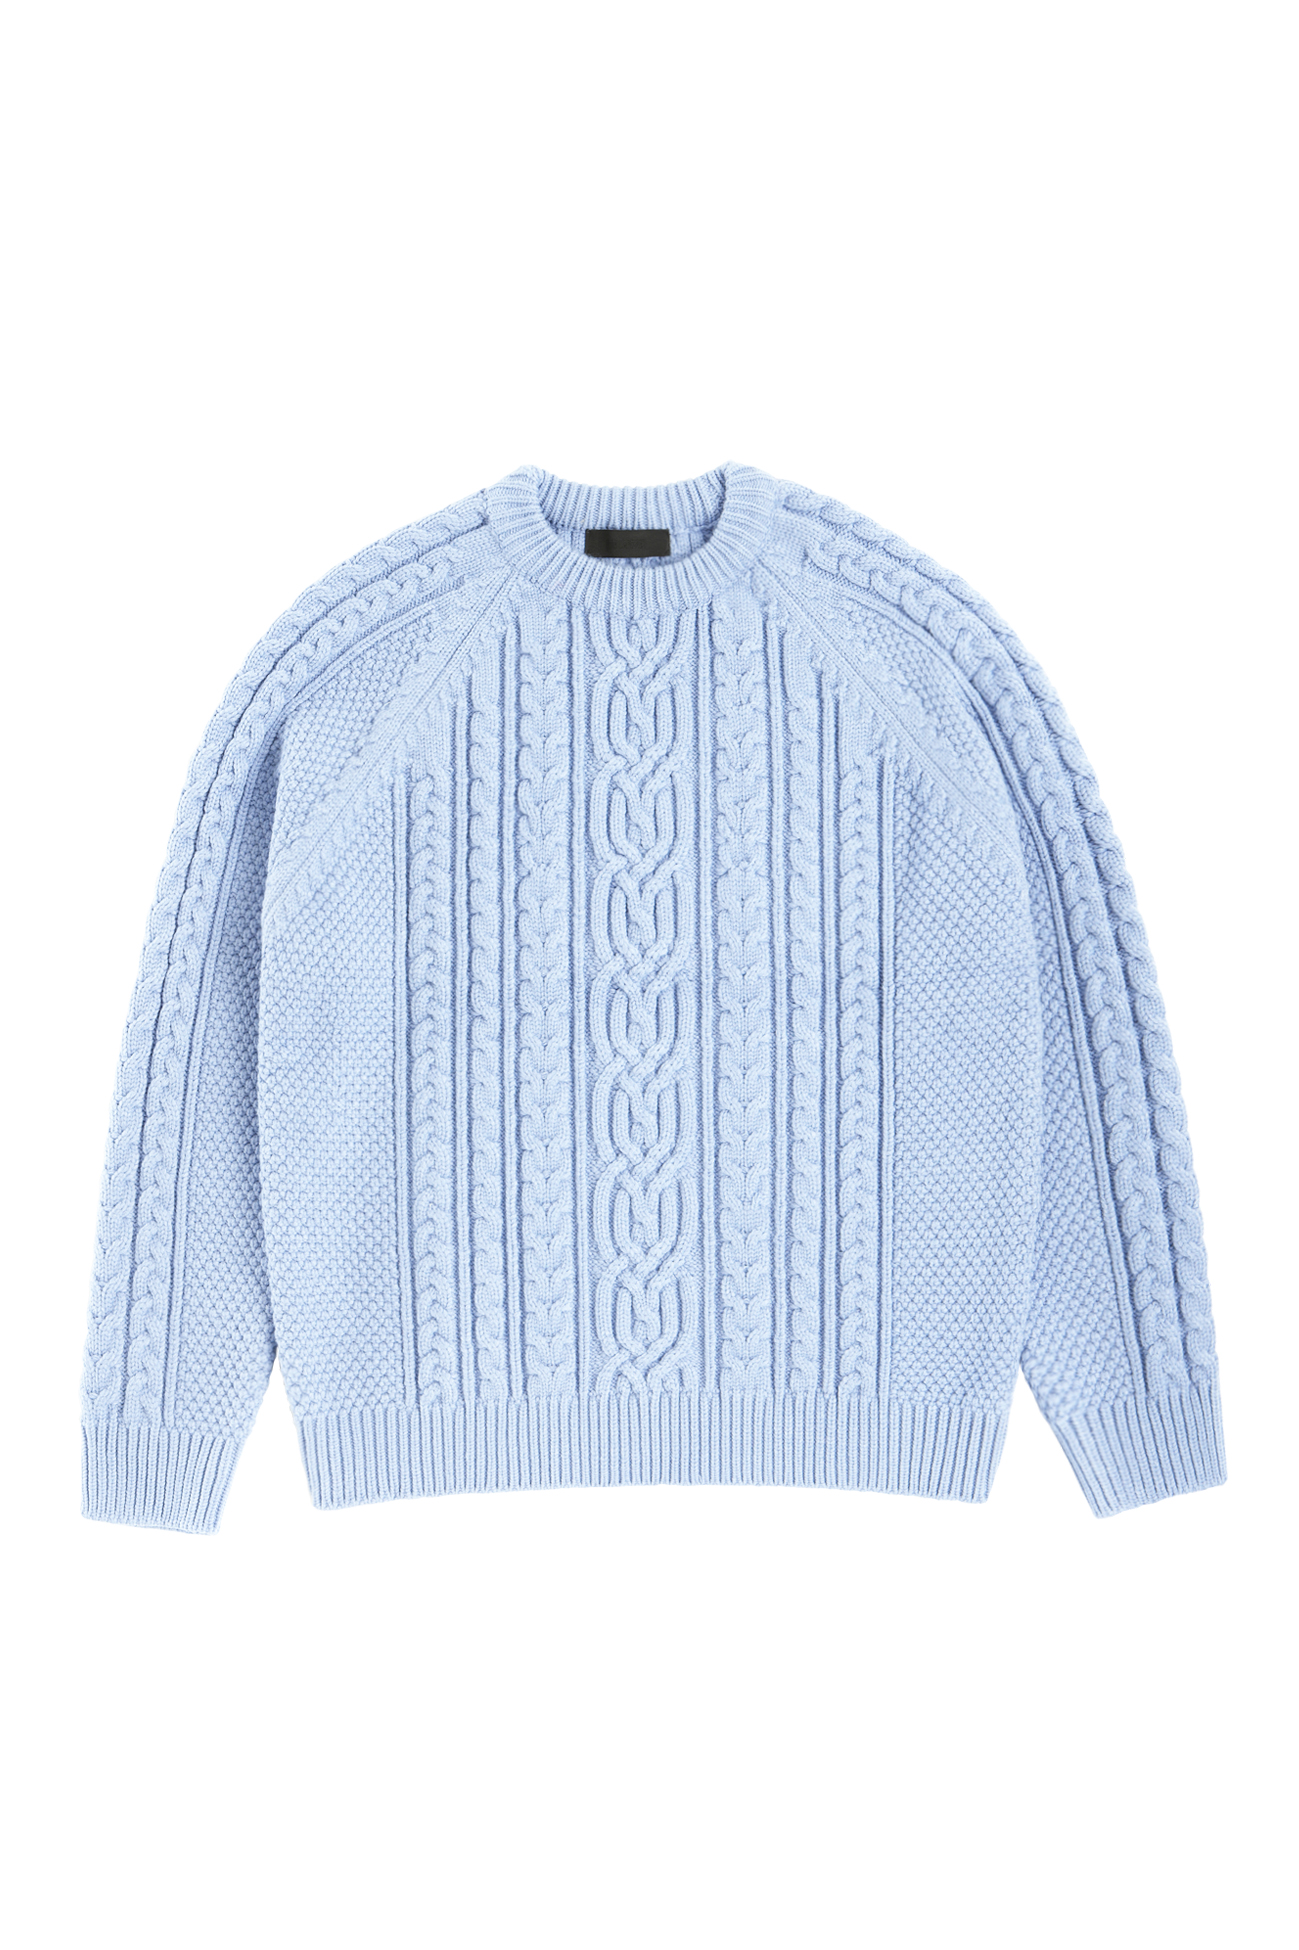 Twister sweater blue